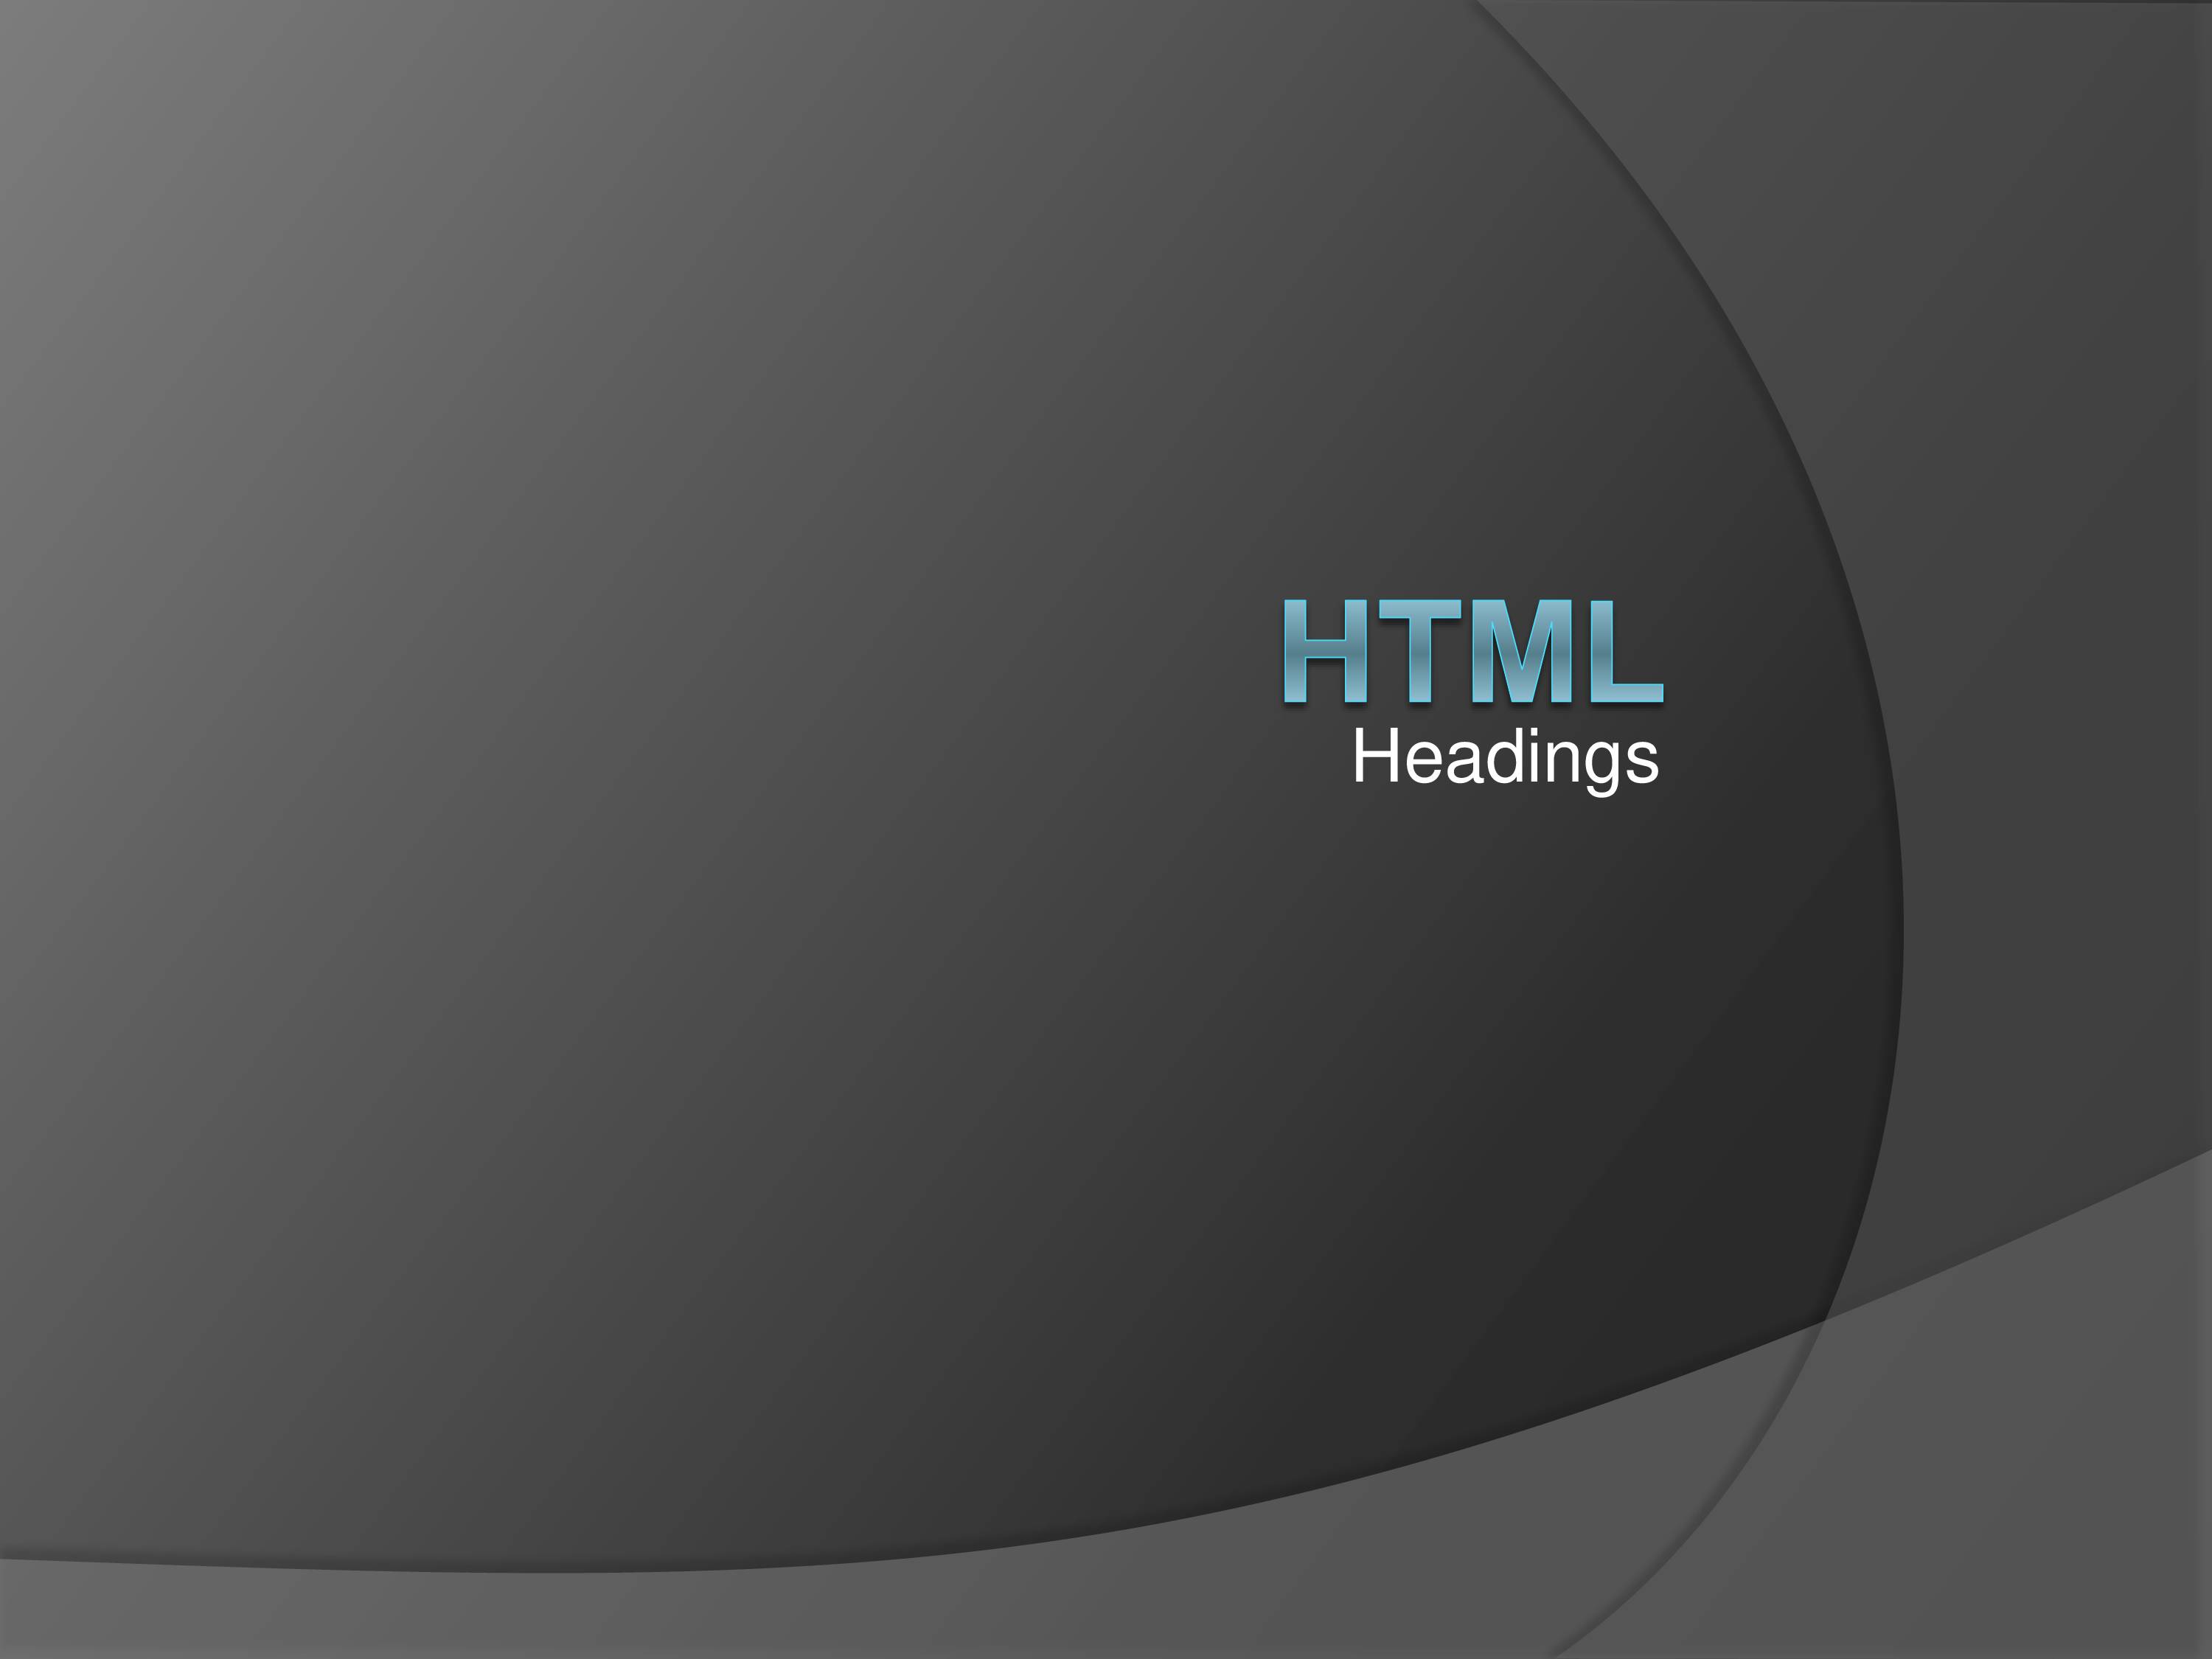 Presentation on HTML Headings